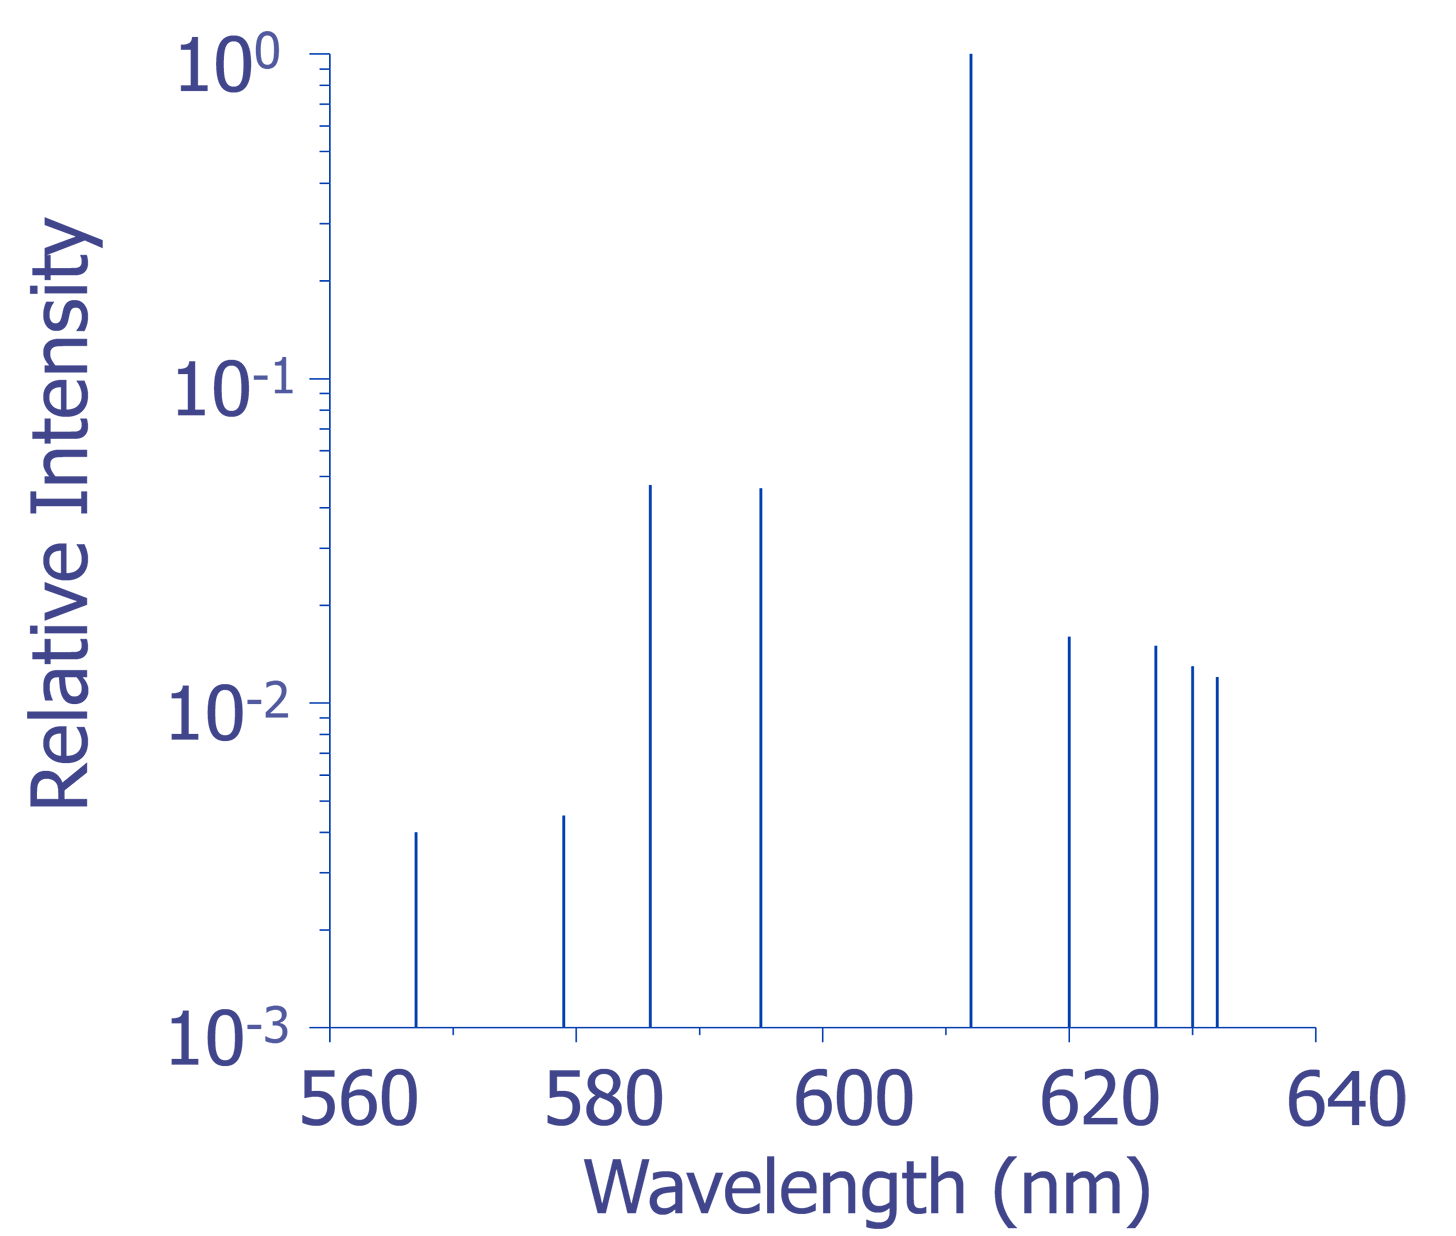 Emission spectra of EuTTA (Crystalline) at 25 °C [15].